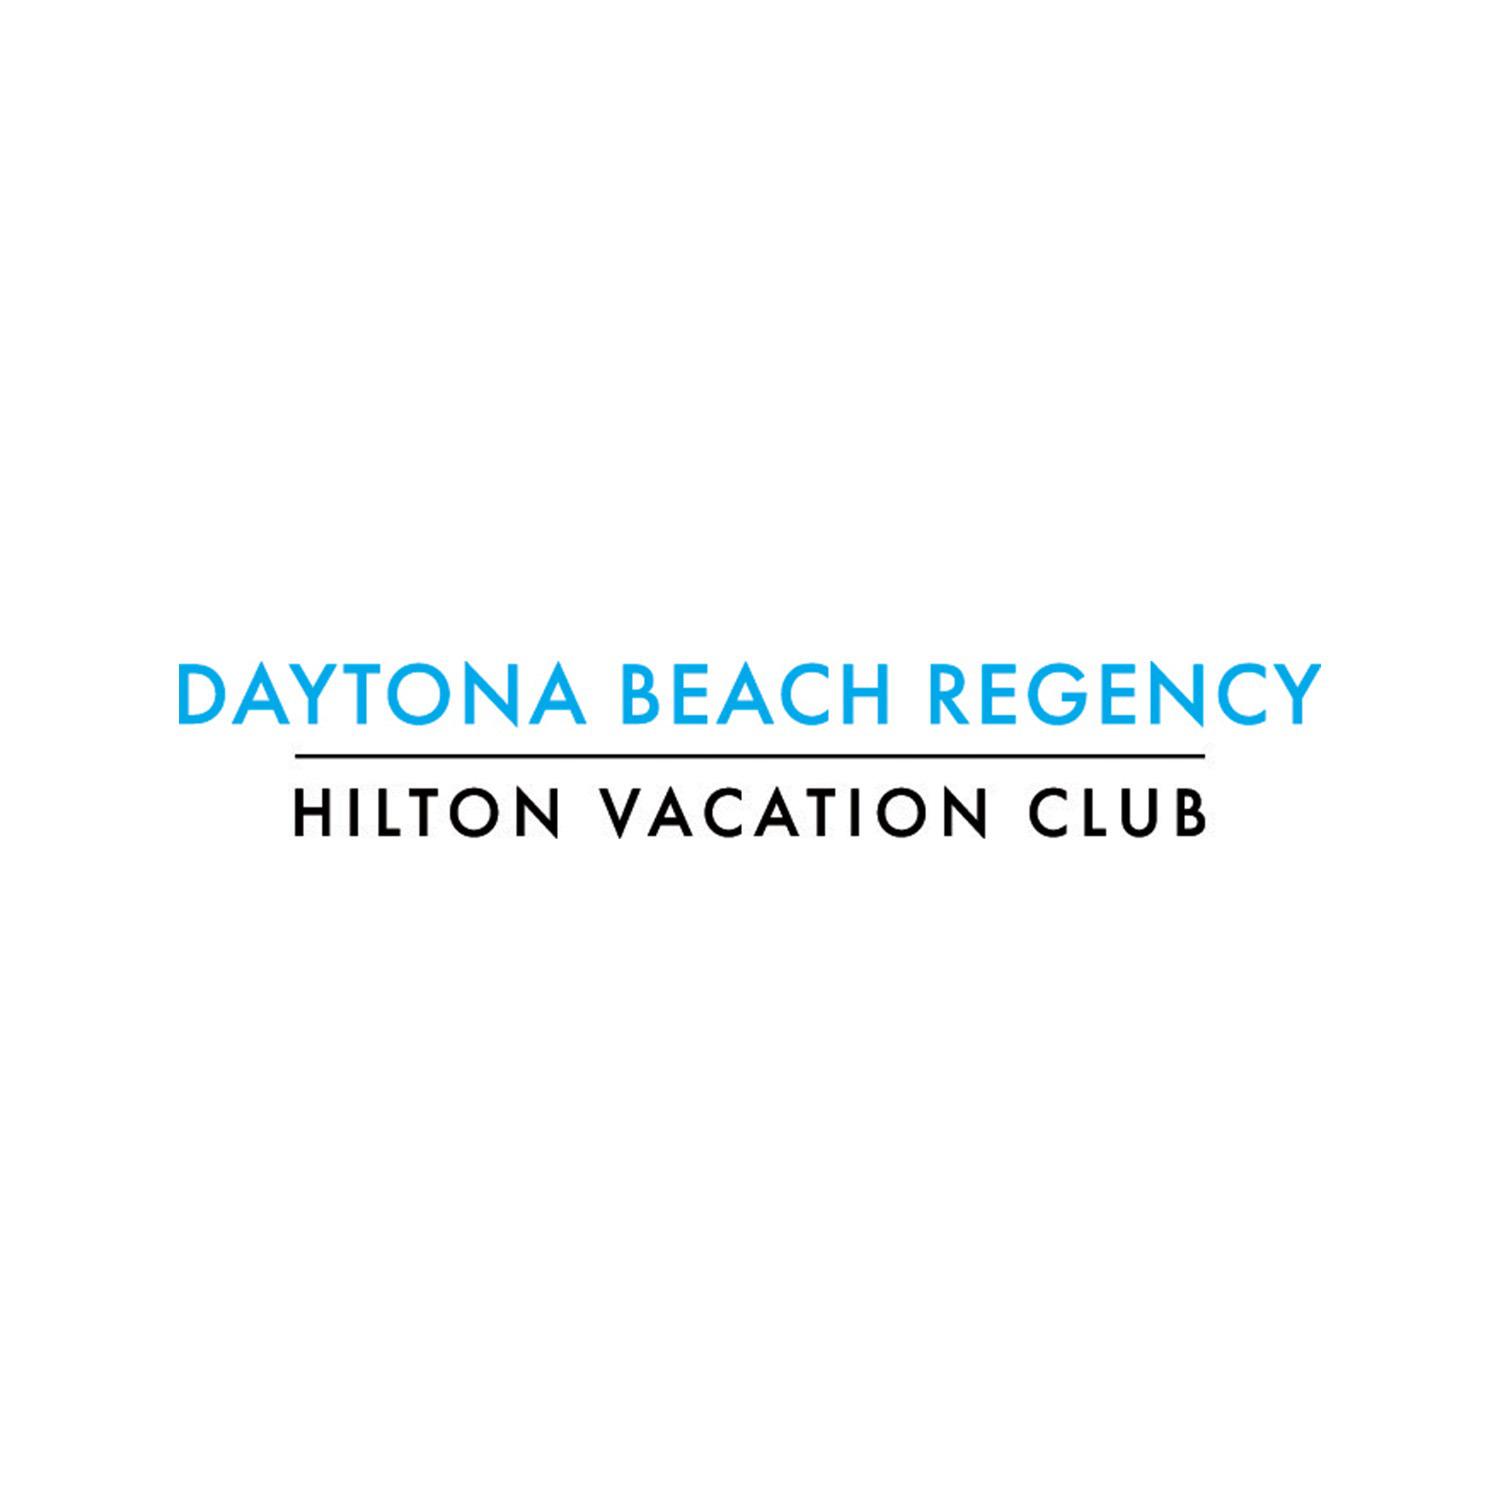 Hilton Vacation Club Daytona Beach Regency - Daytona Beach, FL 32118 - (386)255-0251 | ShowMeLocal.com